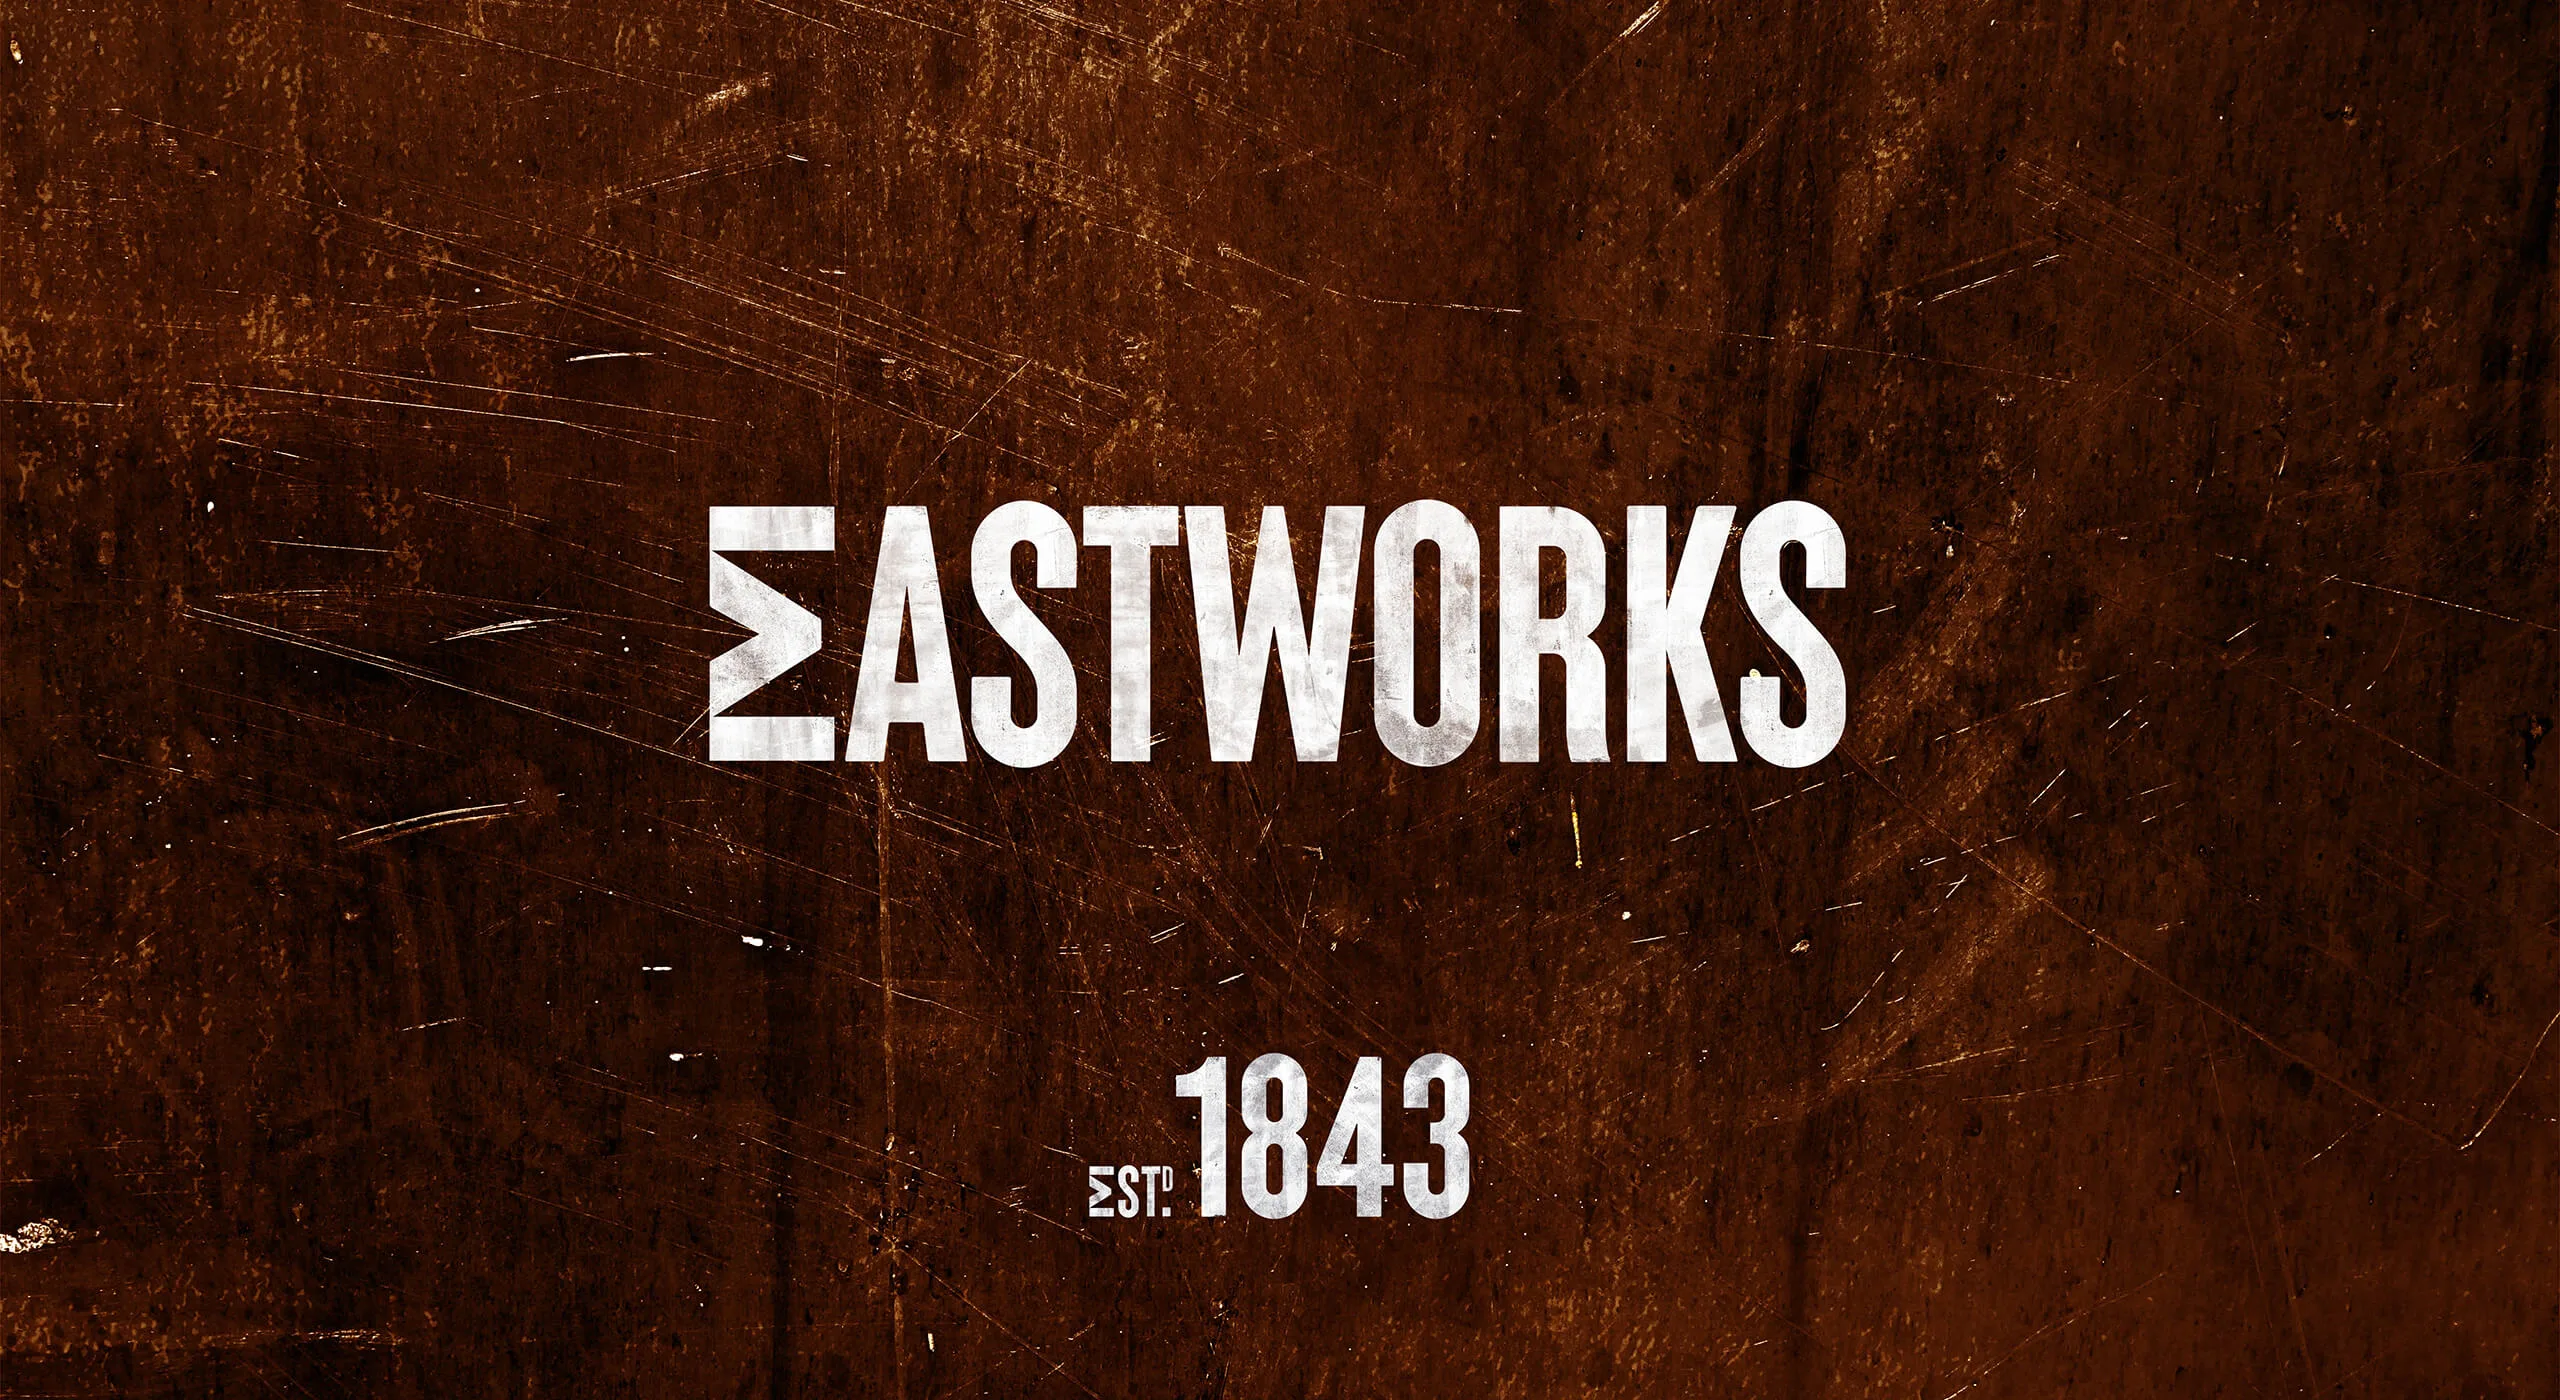 Eastworks logo on distressed background.